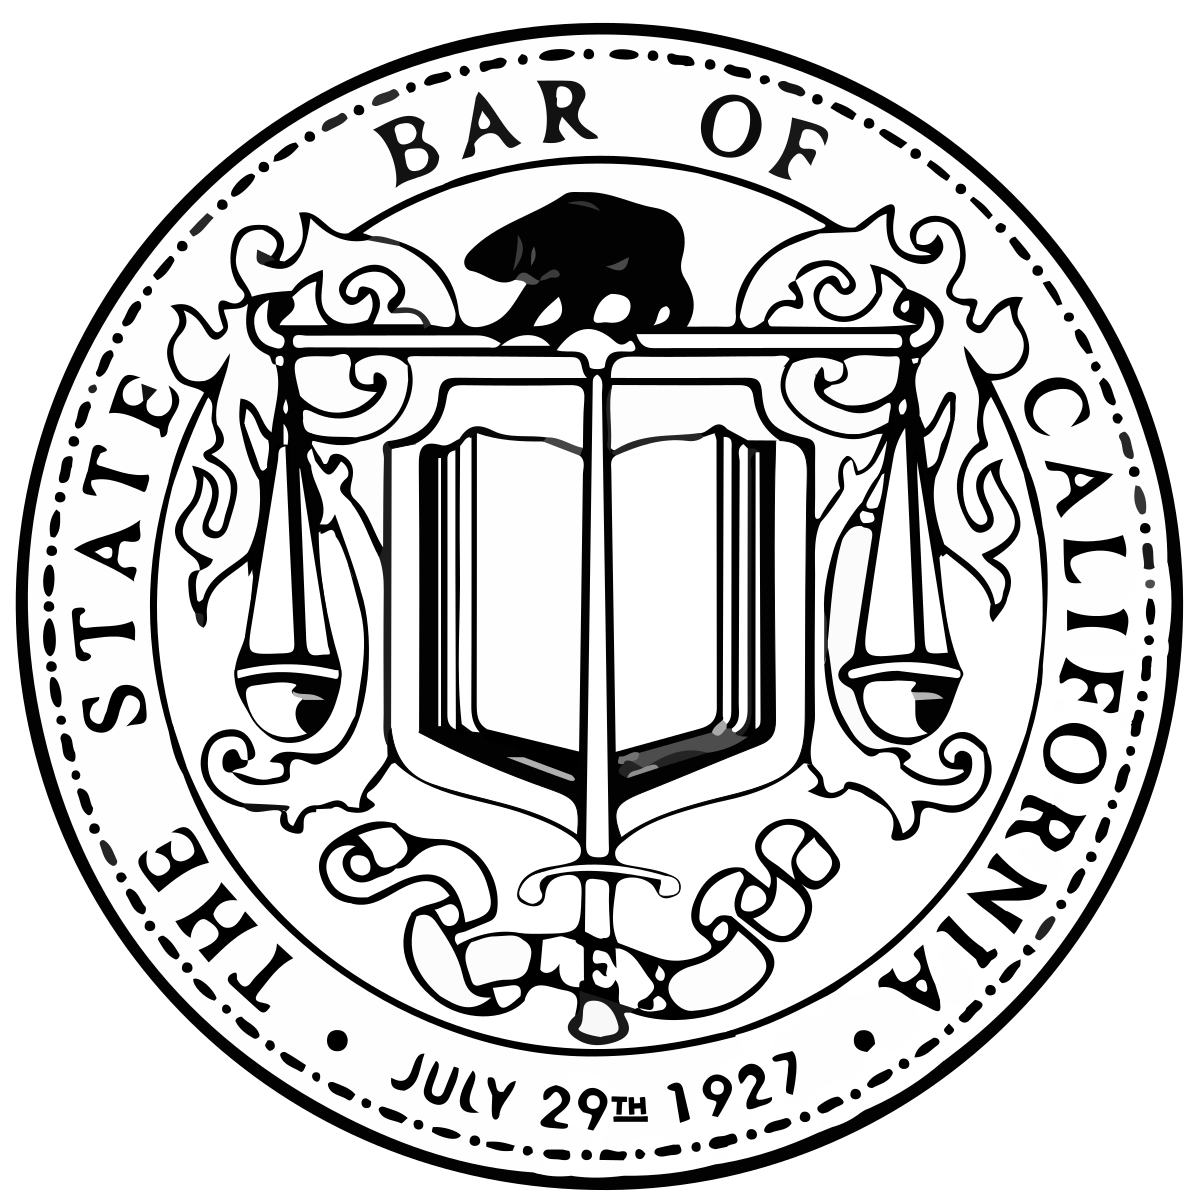 State Bar of California - Wikipedia